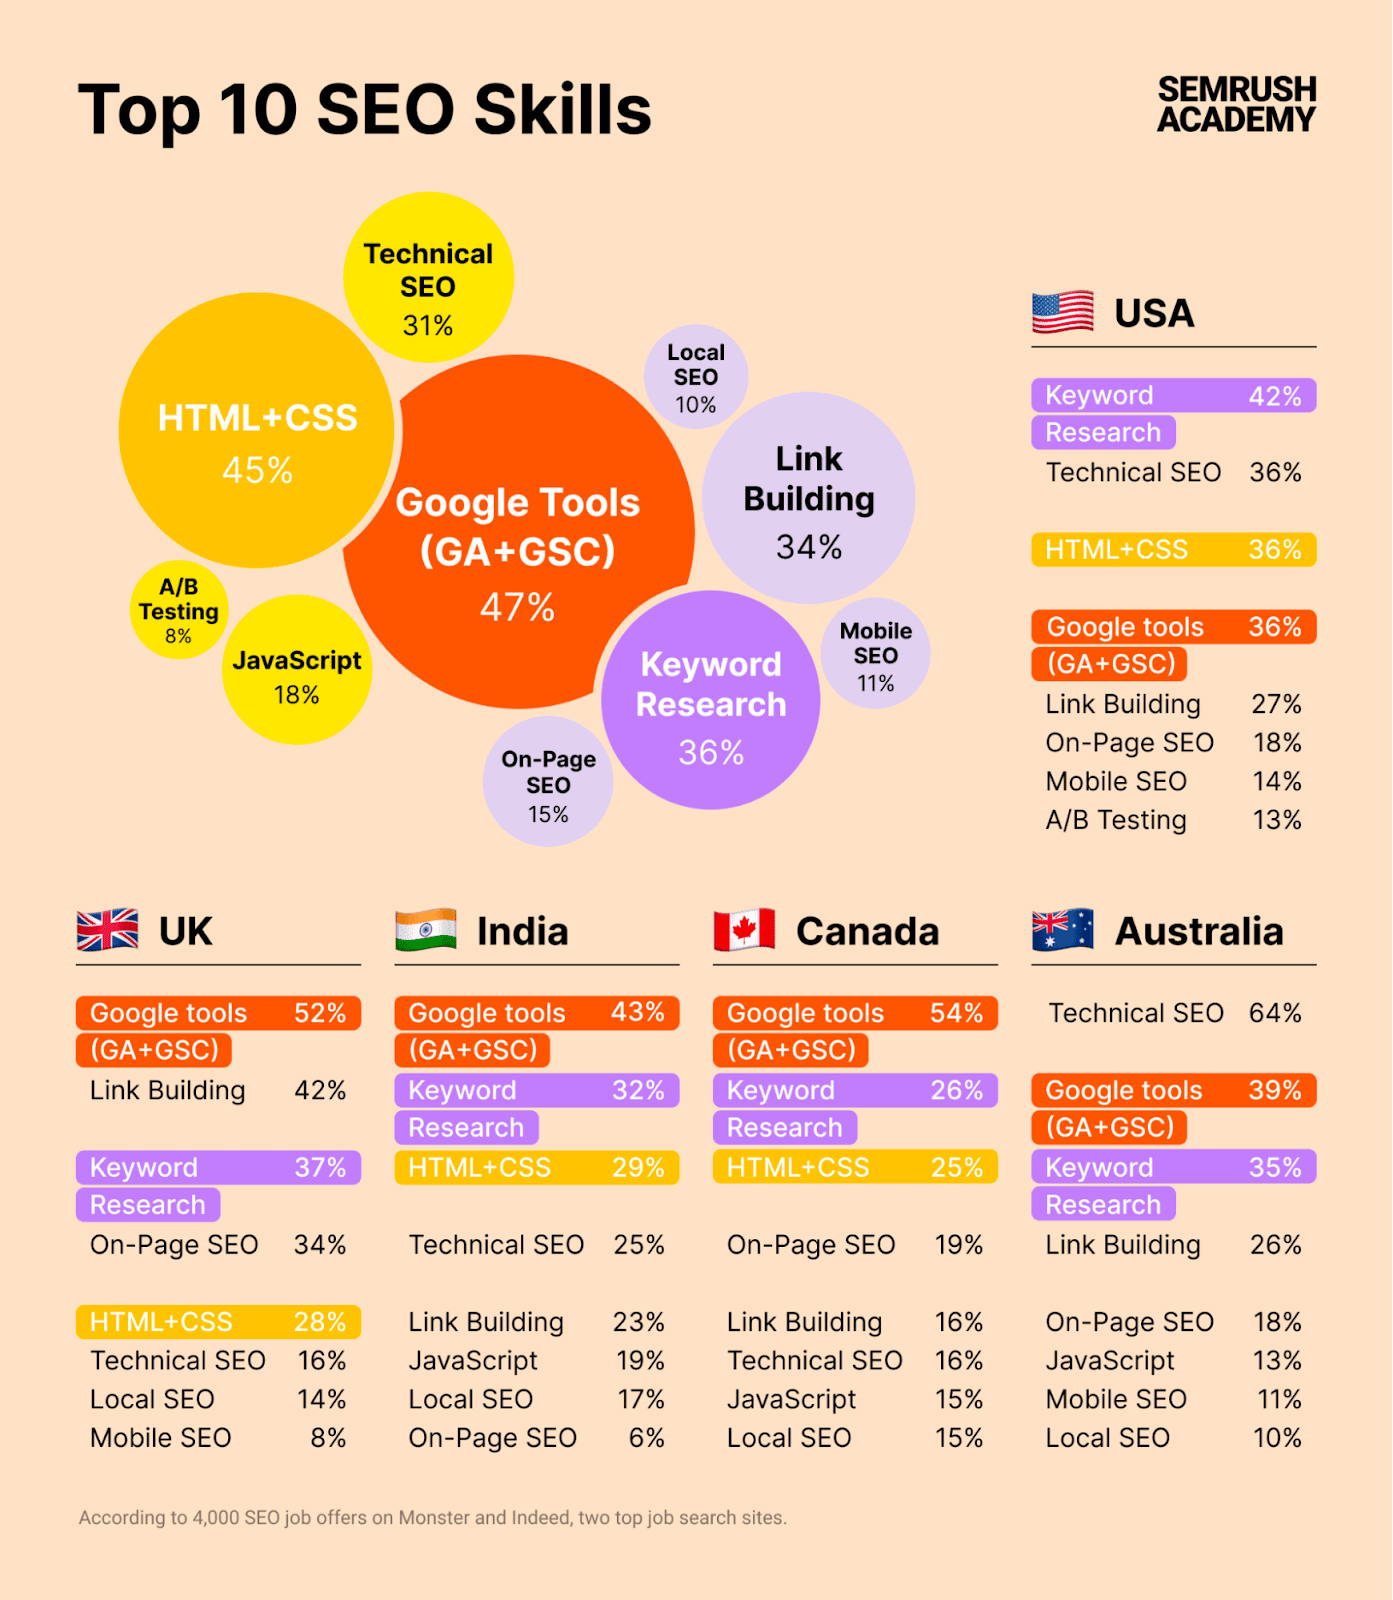 Semrush Academy's "top 10 SEO skills" infographic